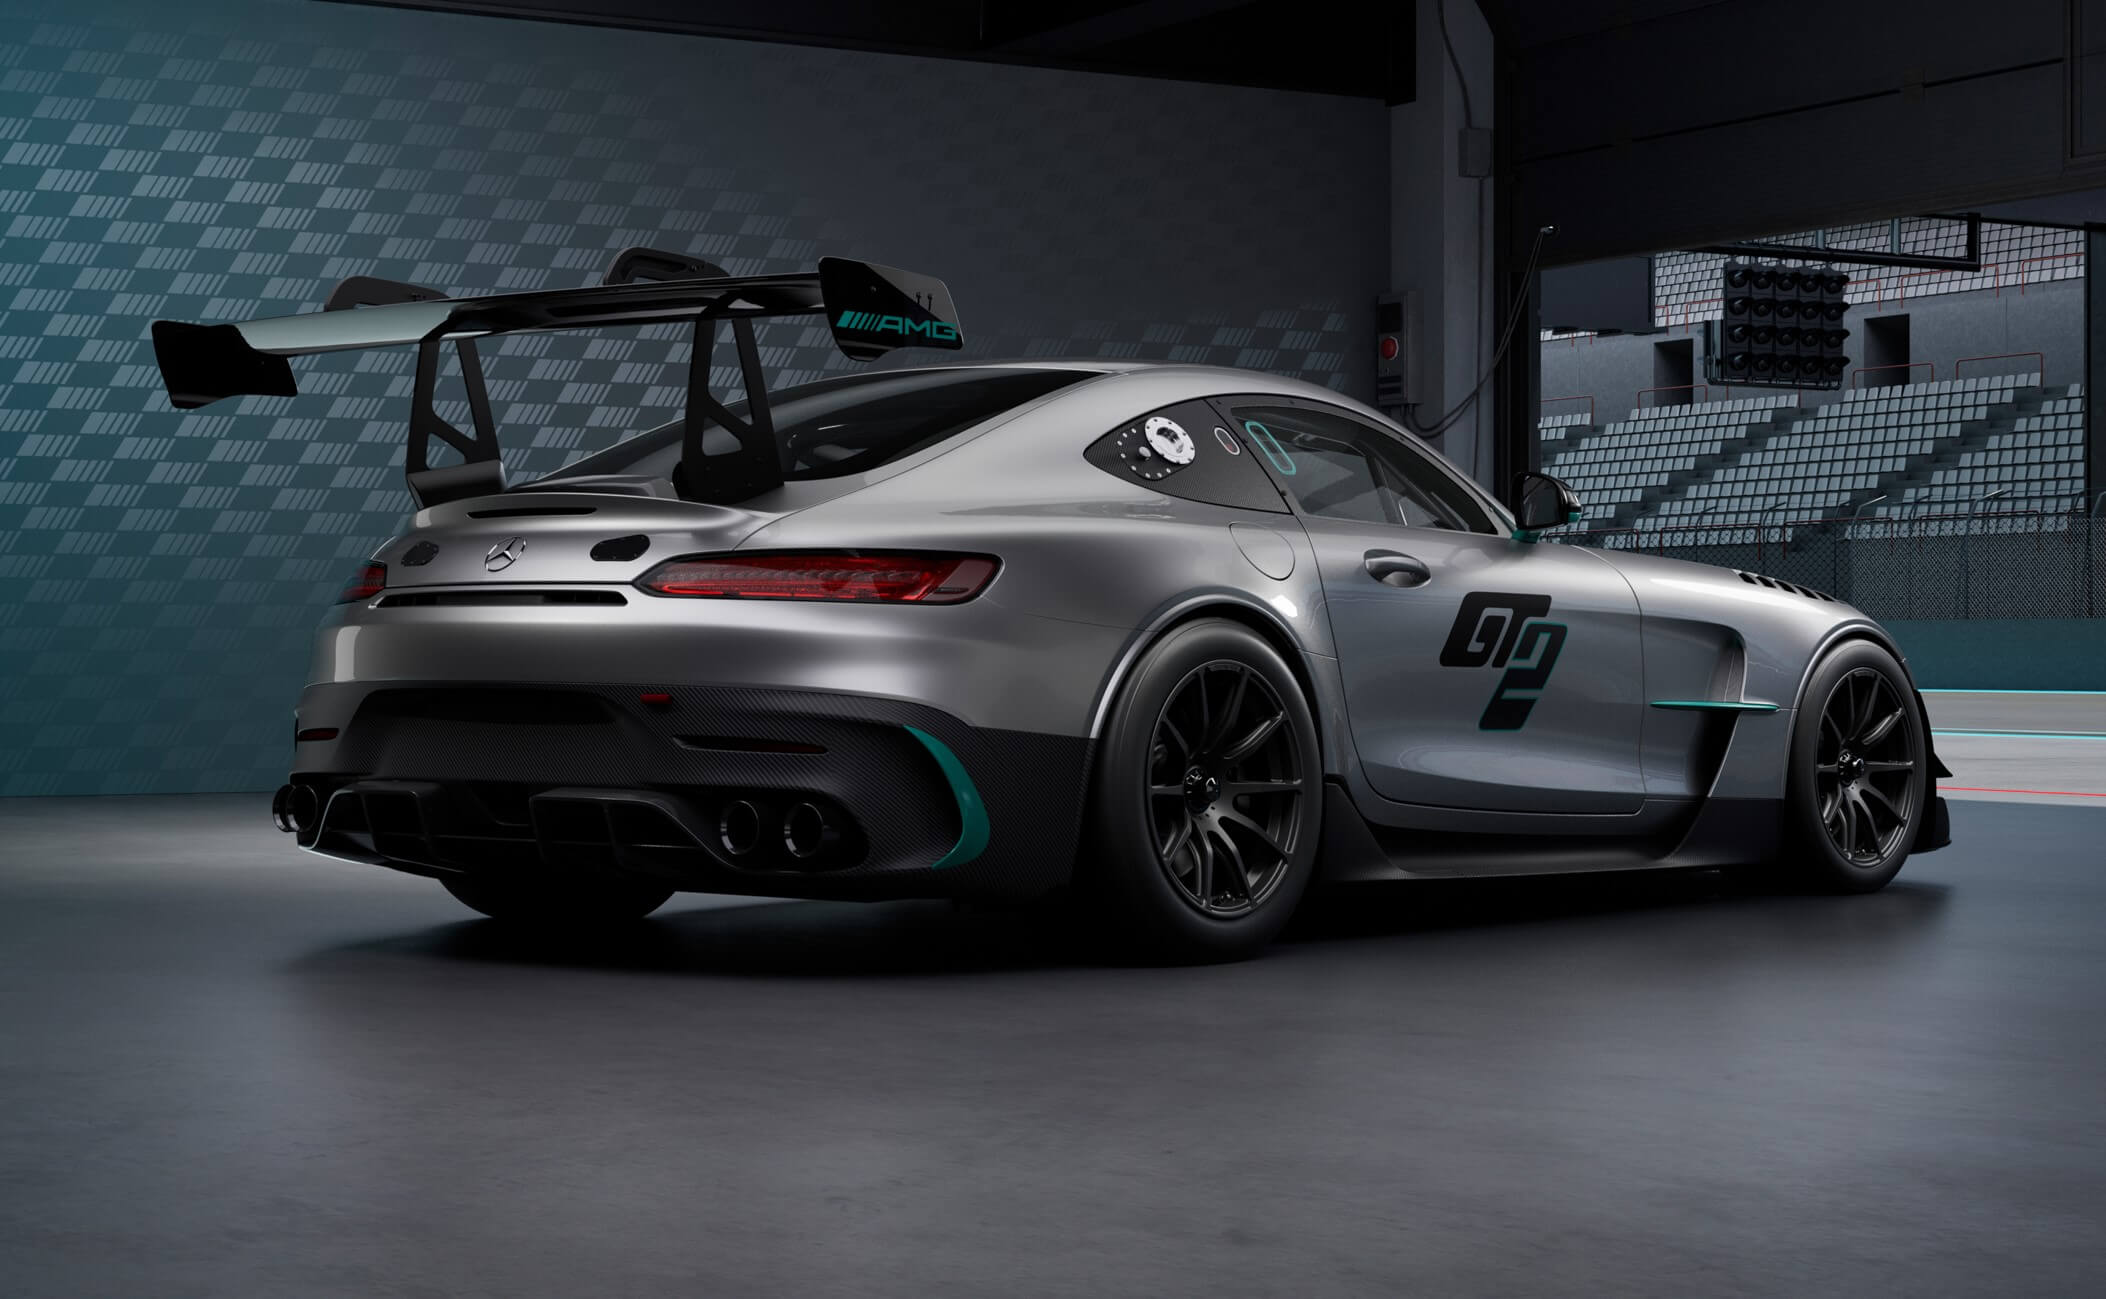 aria-label="Mercedes AMG GT2 3"